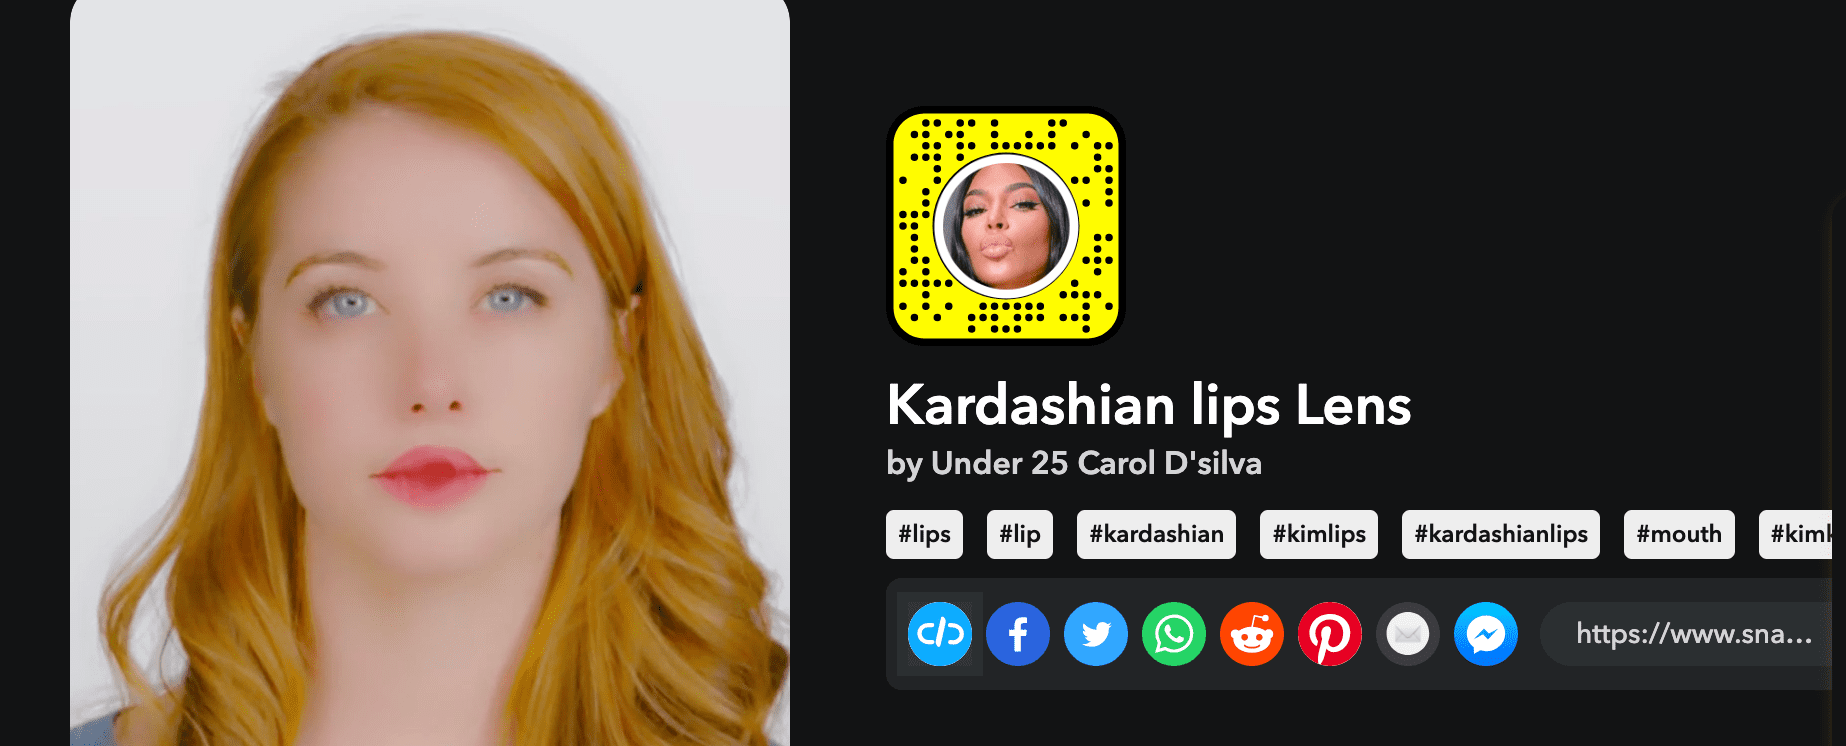 Kardashian Lips Lens by under 25 carol d'silva